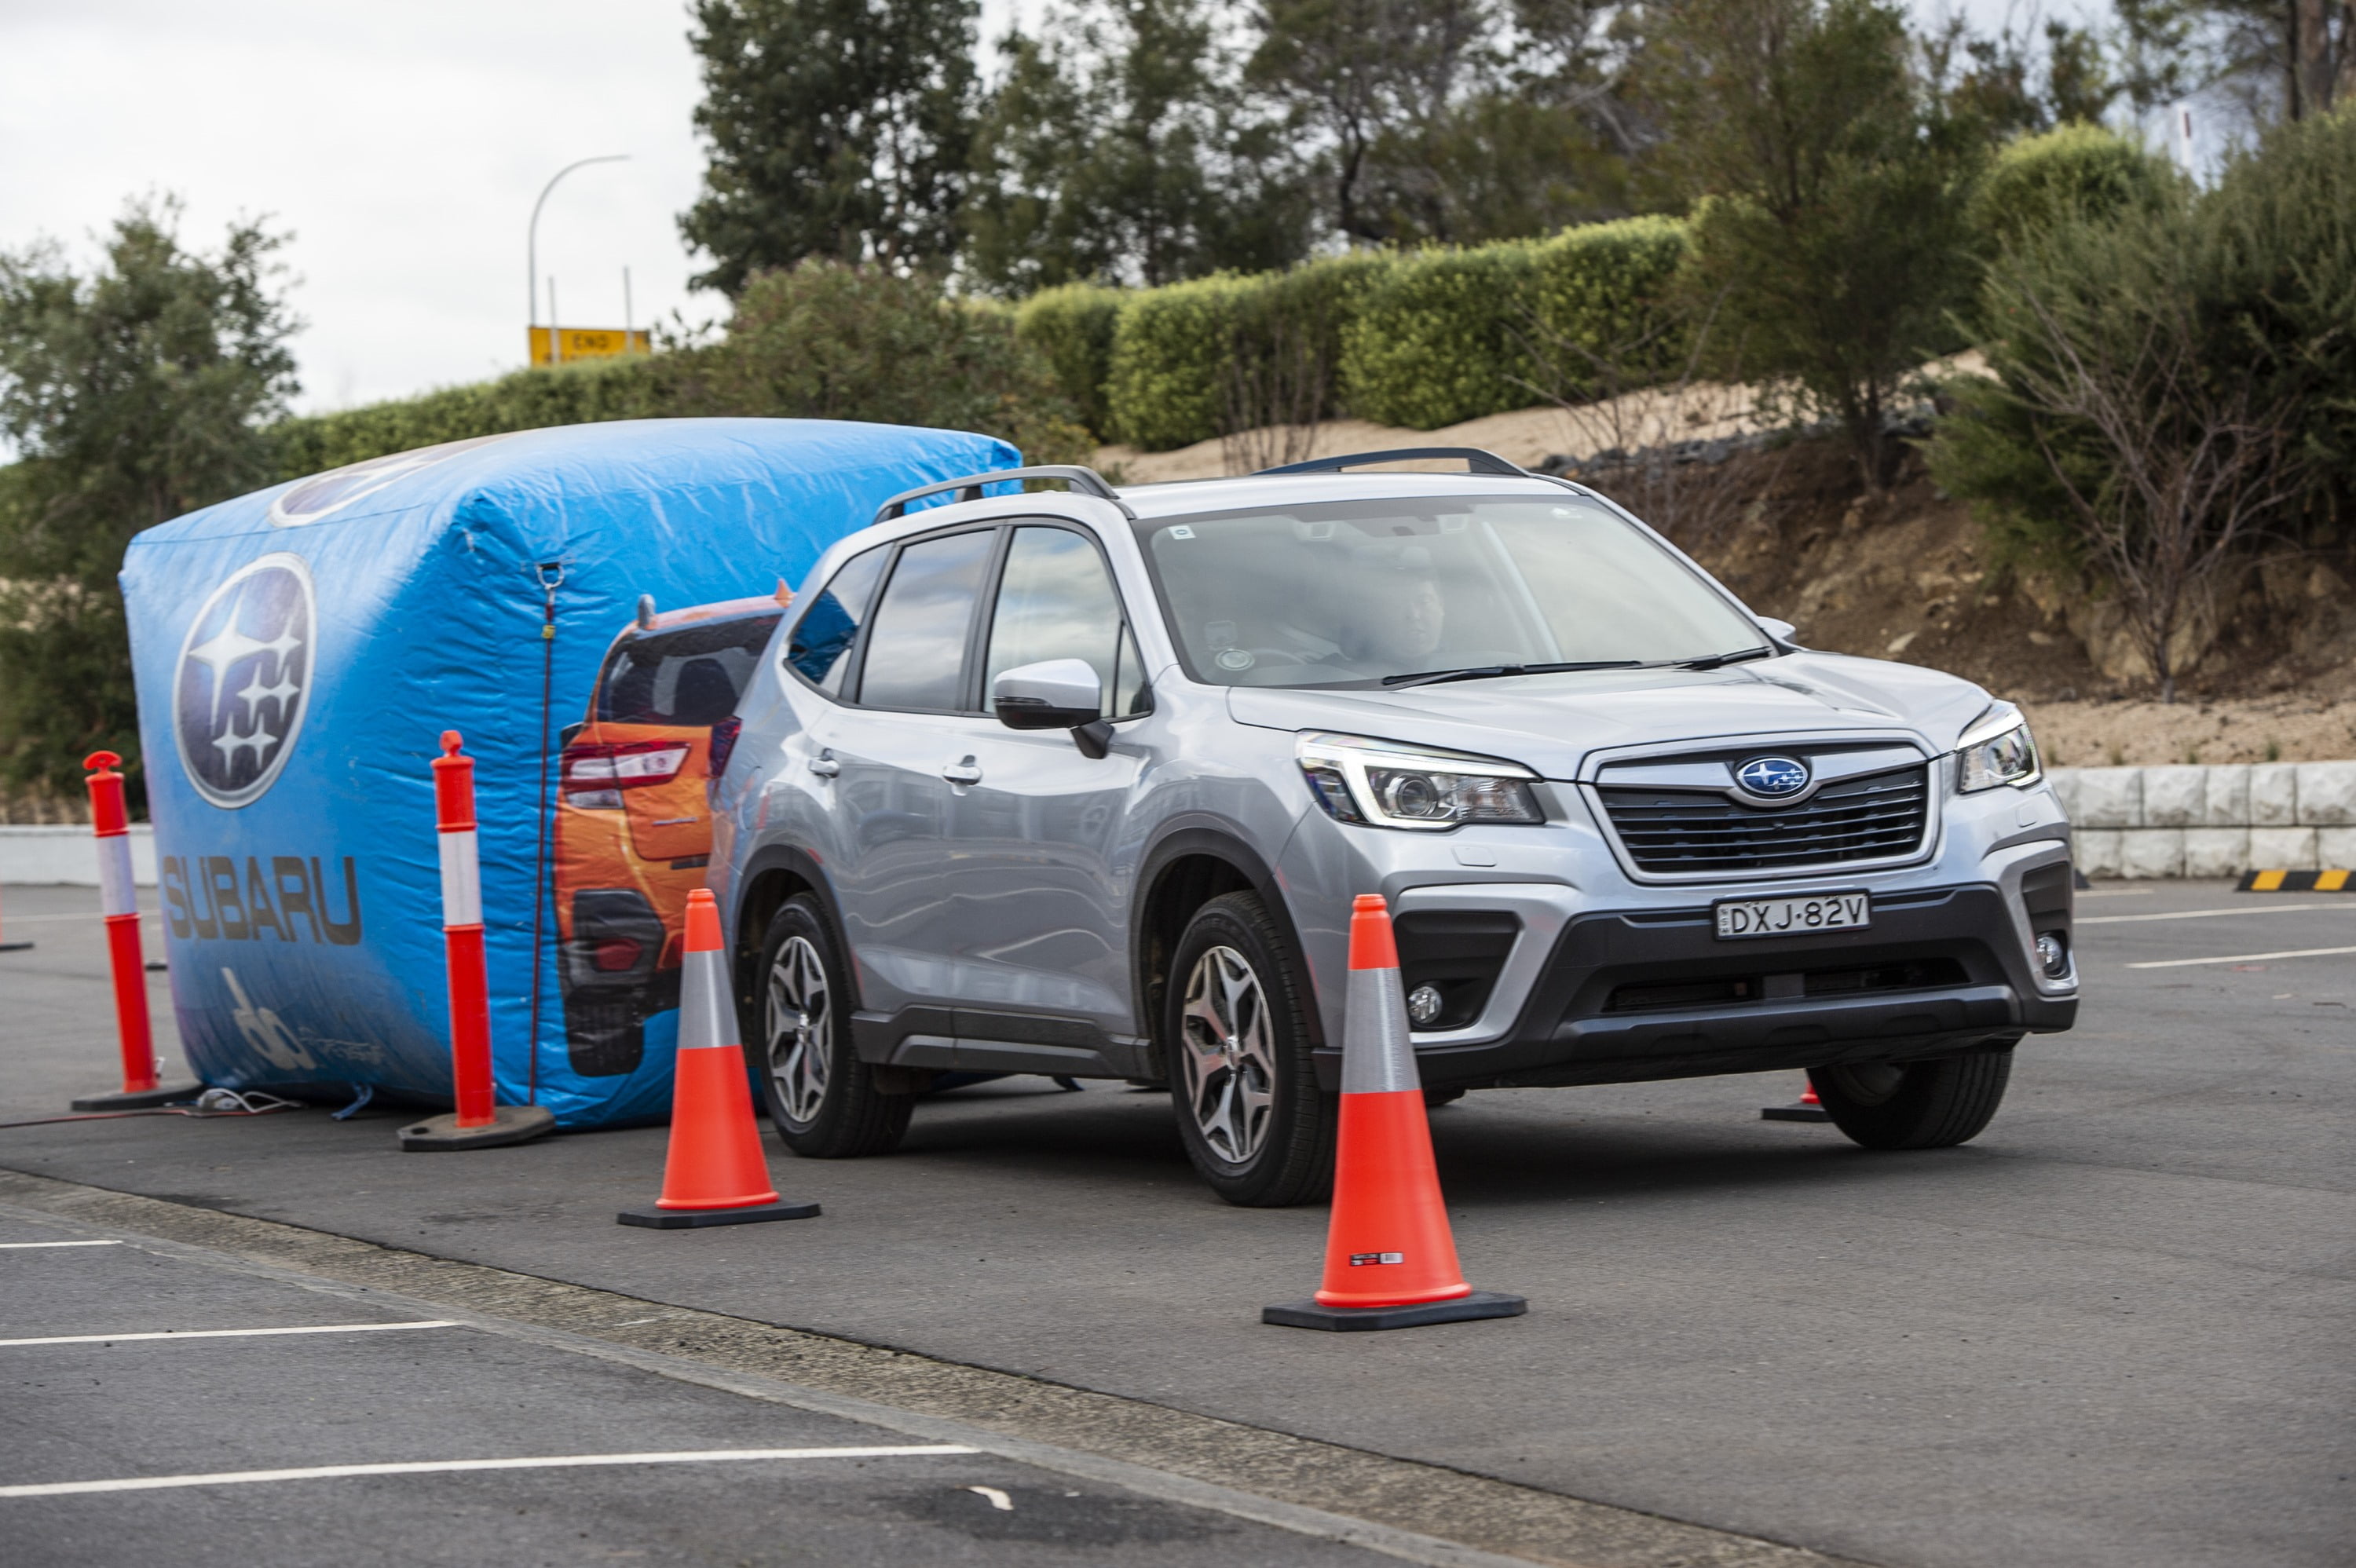 2019 Subaru Tasmania SUV Experience, June 19-21. Featuring Subaru Forester, Outback and XV vehicles. (Photo Narrative Post/Matthias Engesser)